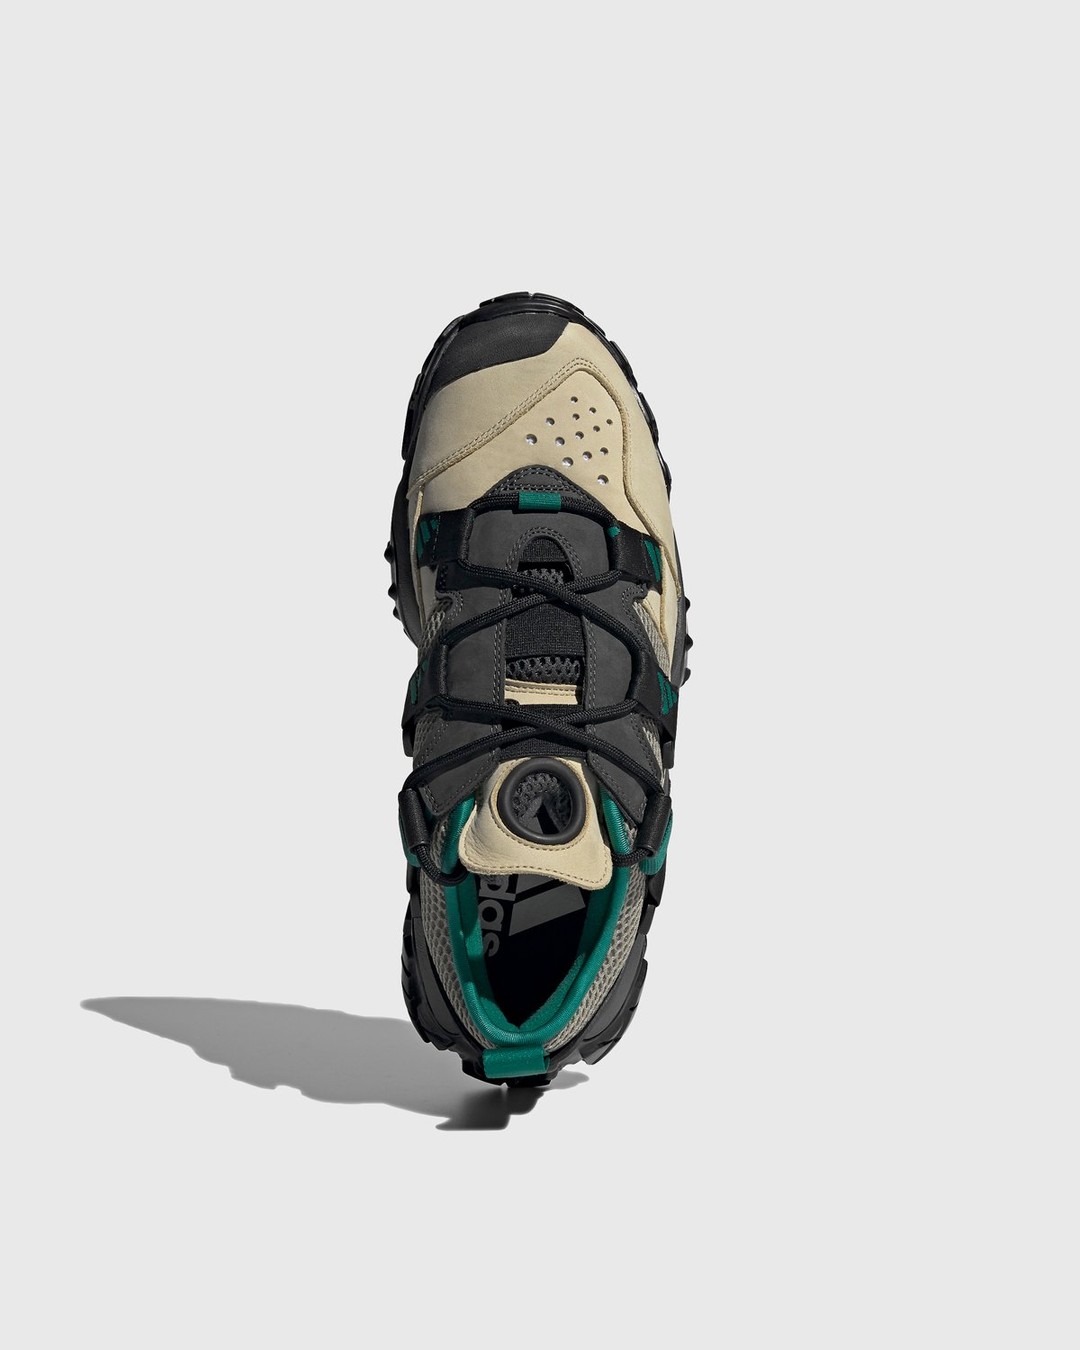 Adidas – FYW XTA Sand/Black/Green - Sneakers - Multi - Image 3